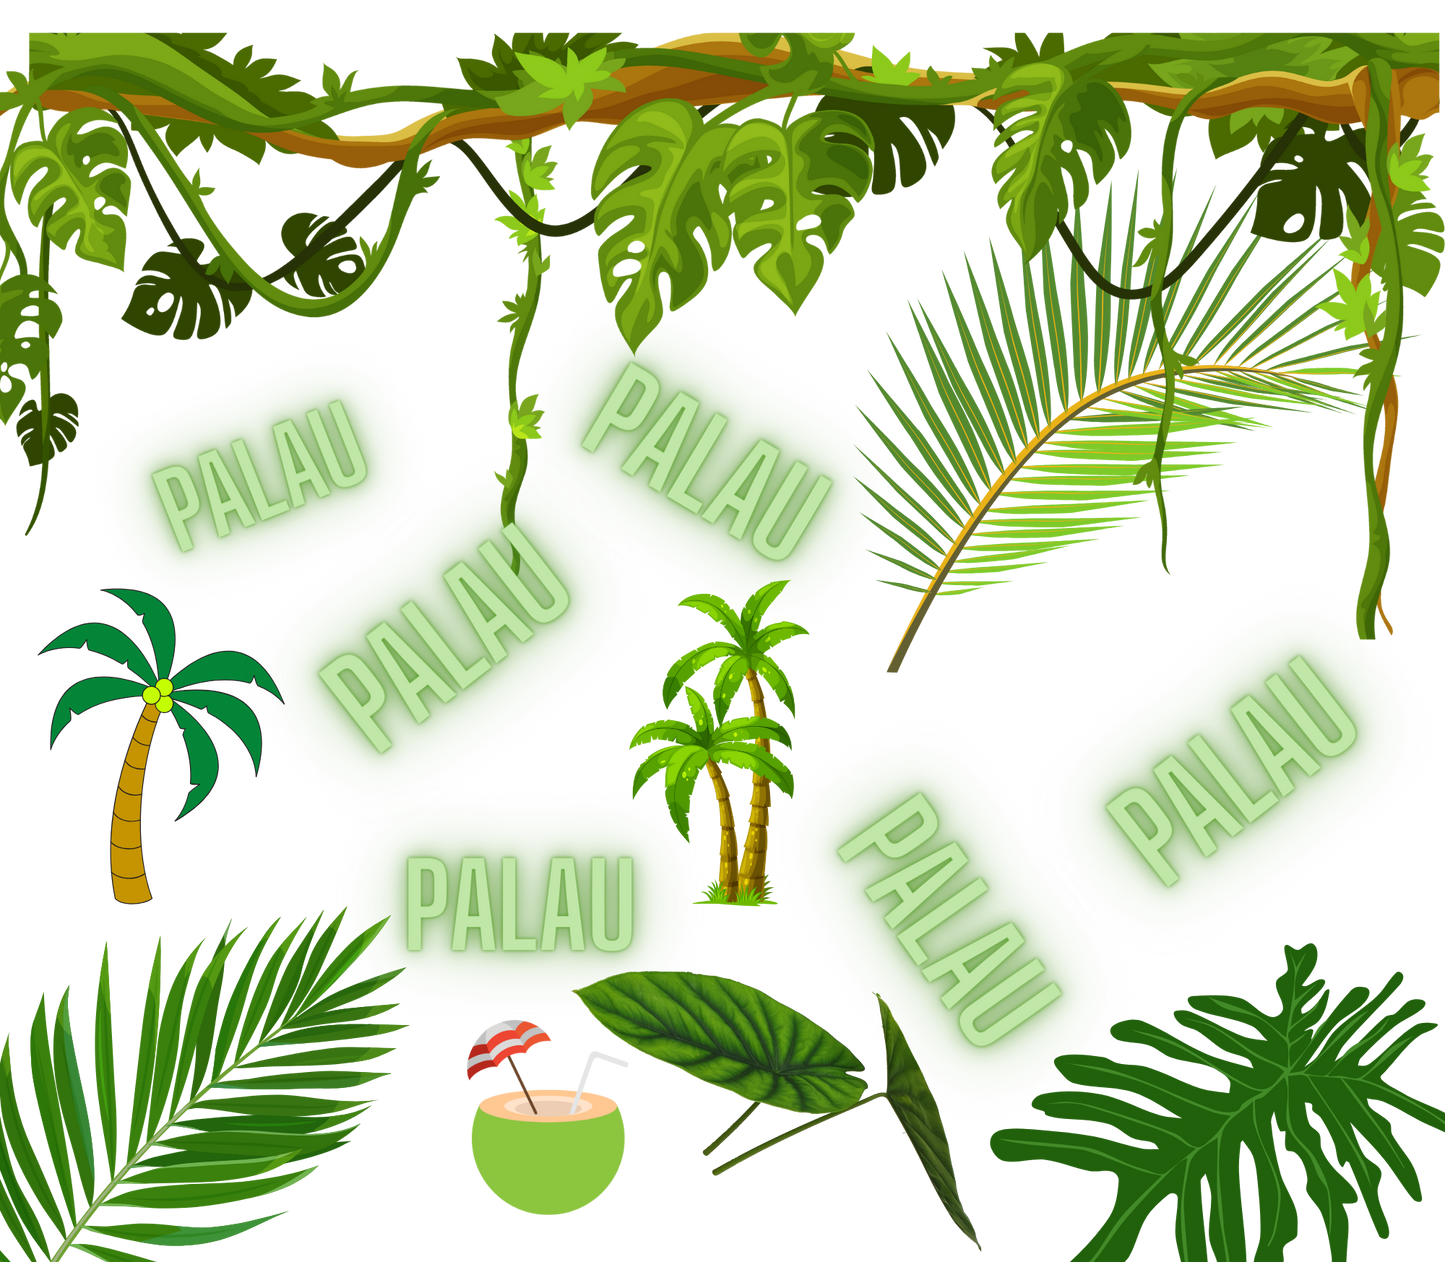 Palau Jungle Works